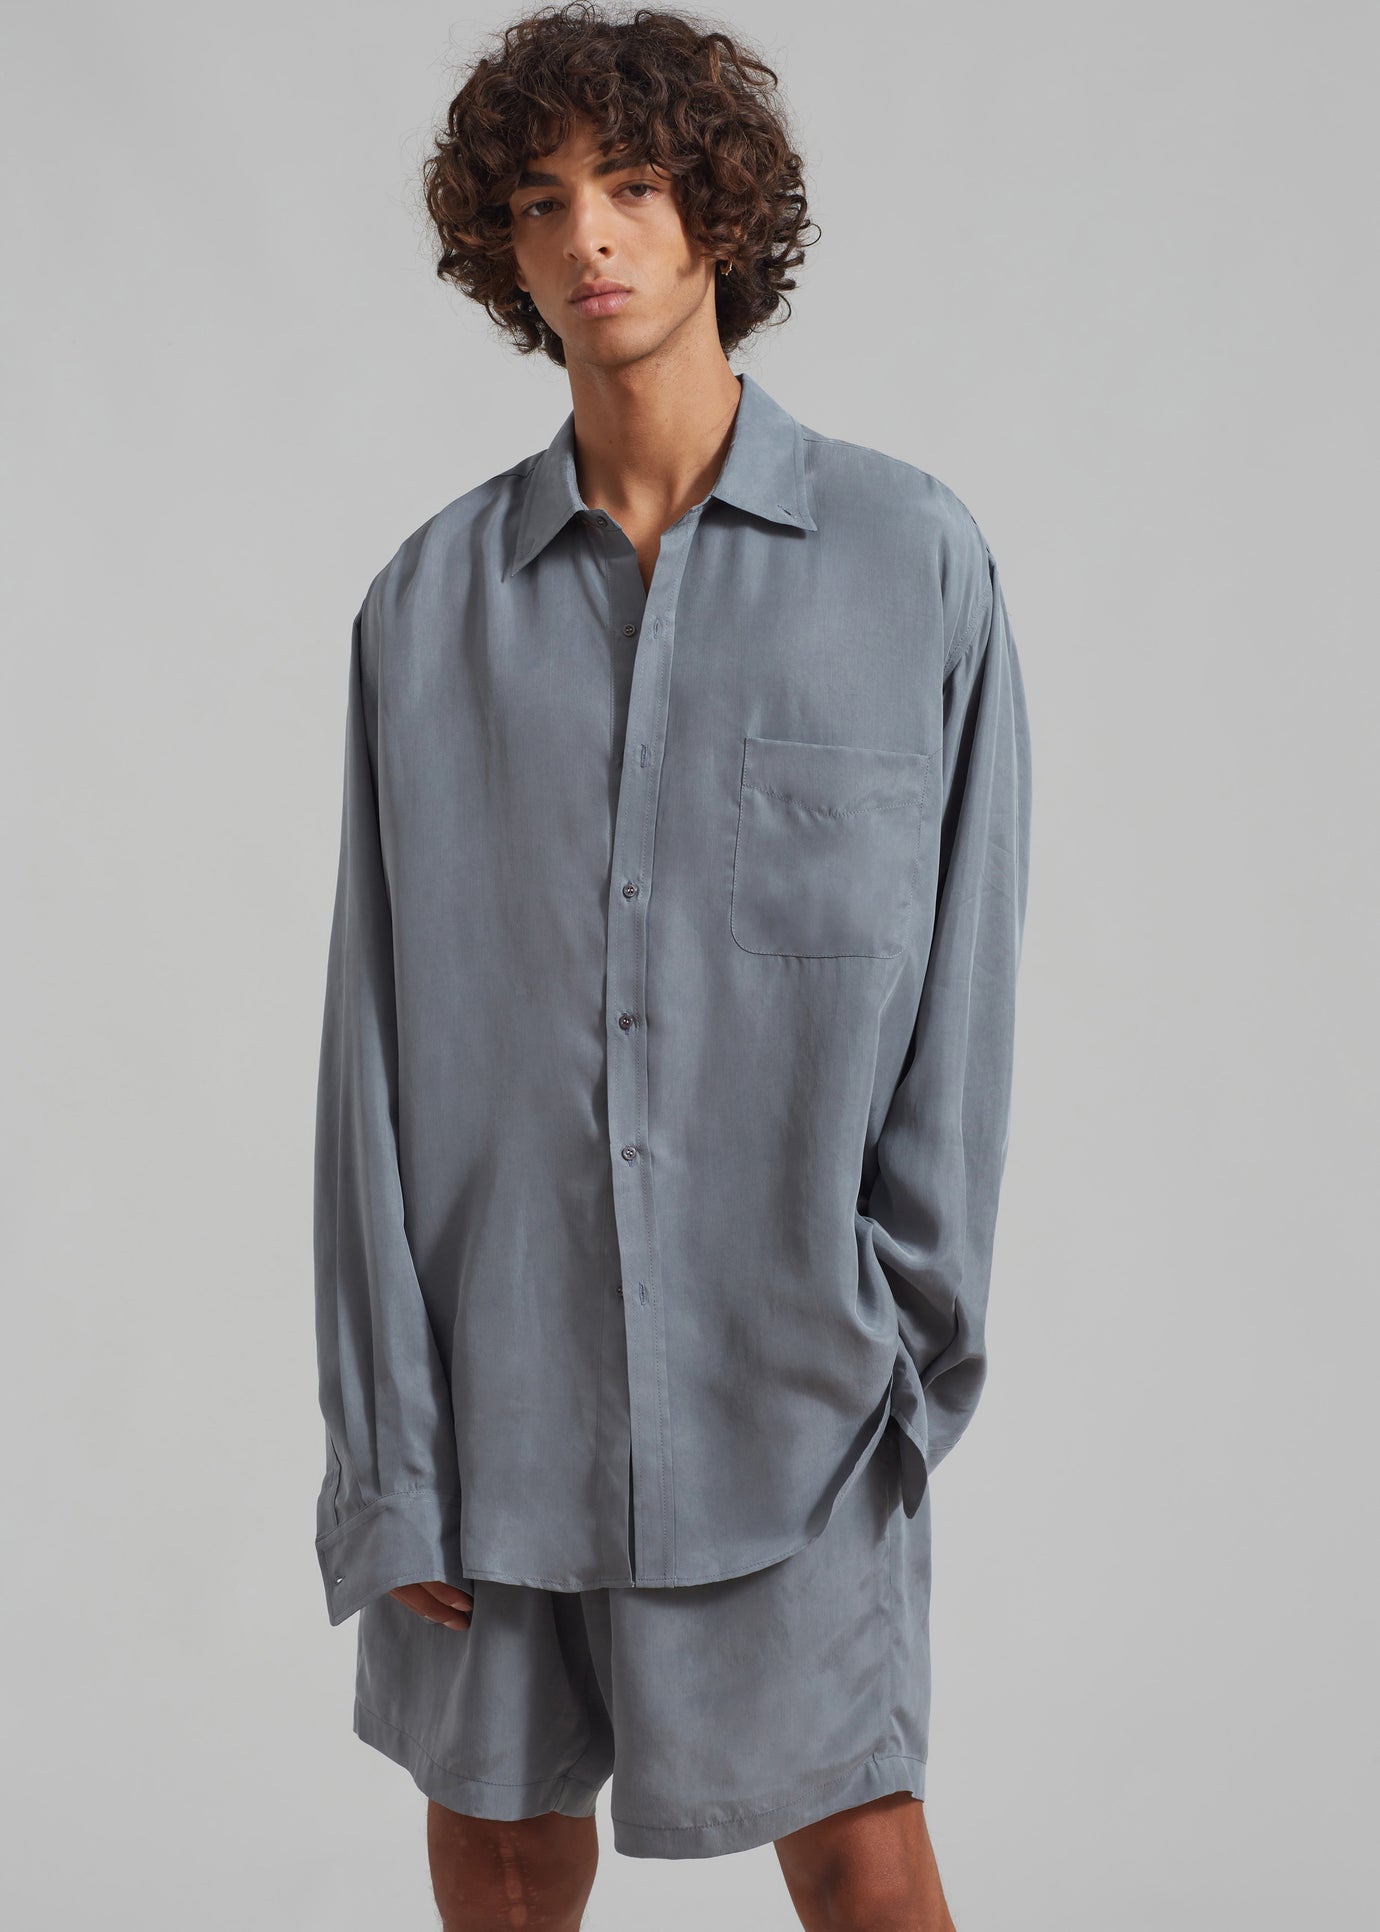 Leland Silky Shirt - Charcoal